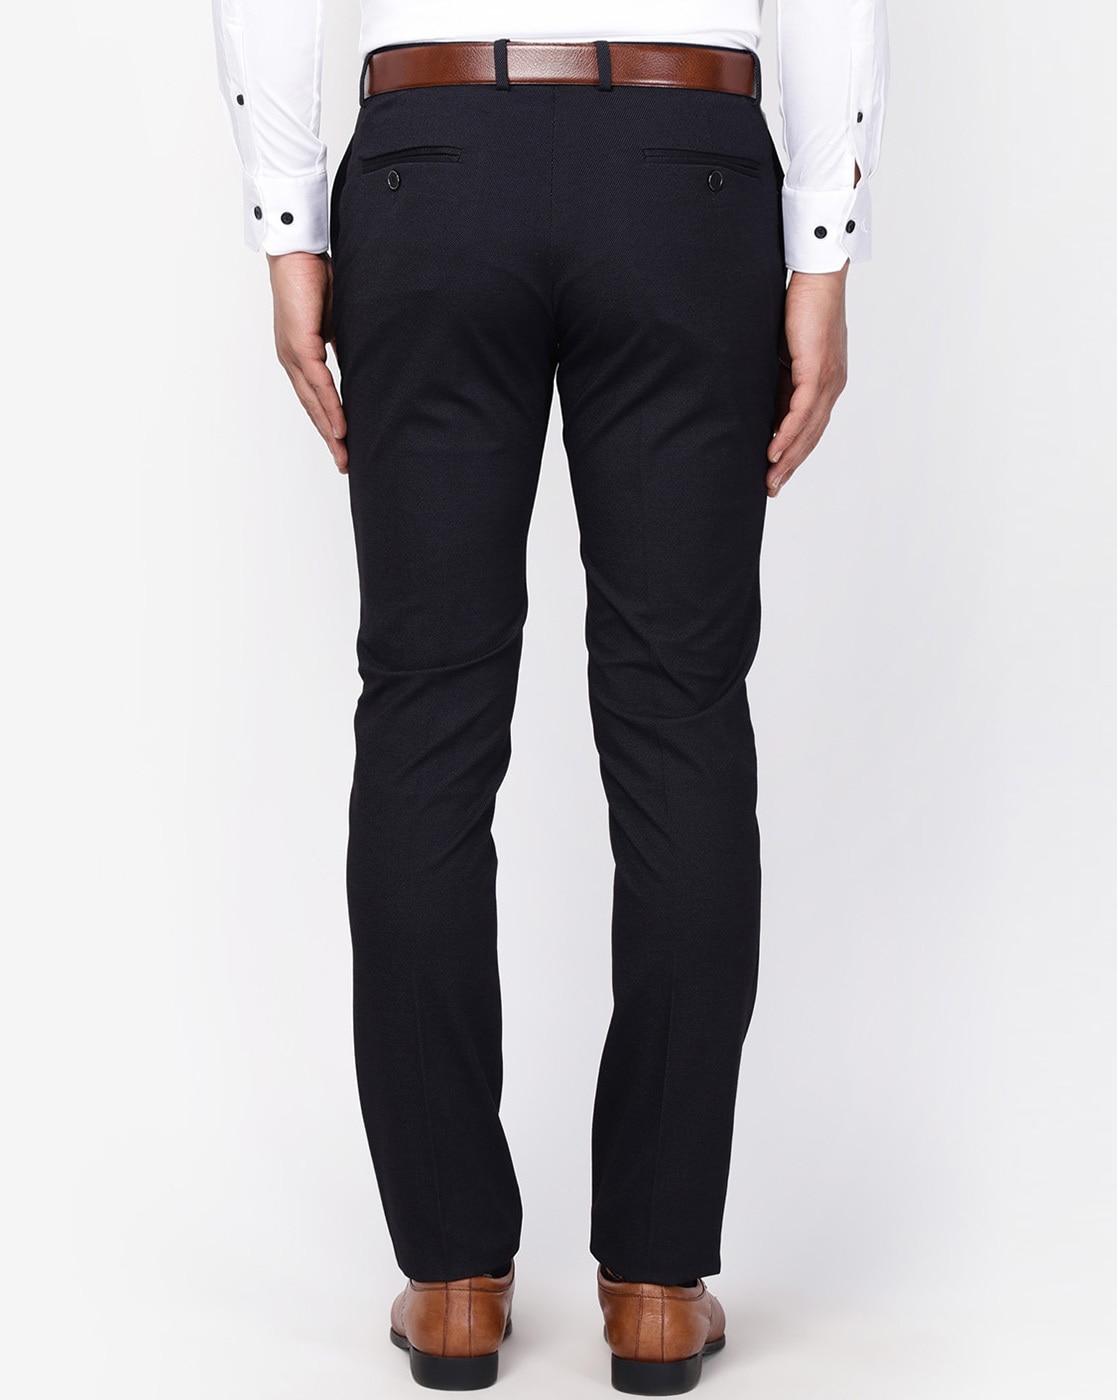 Buy blackberrys Dark Olive Formal Trousers (Size: 30)-NL-DO-MOONFORD # Dark  Olive at Amazon.in